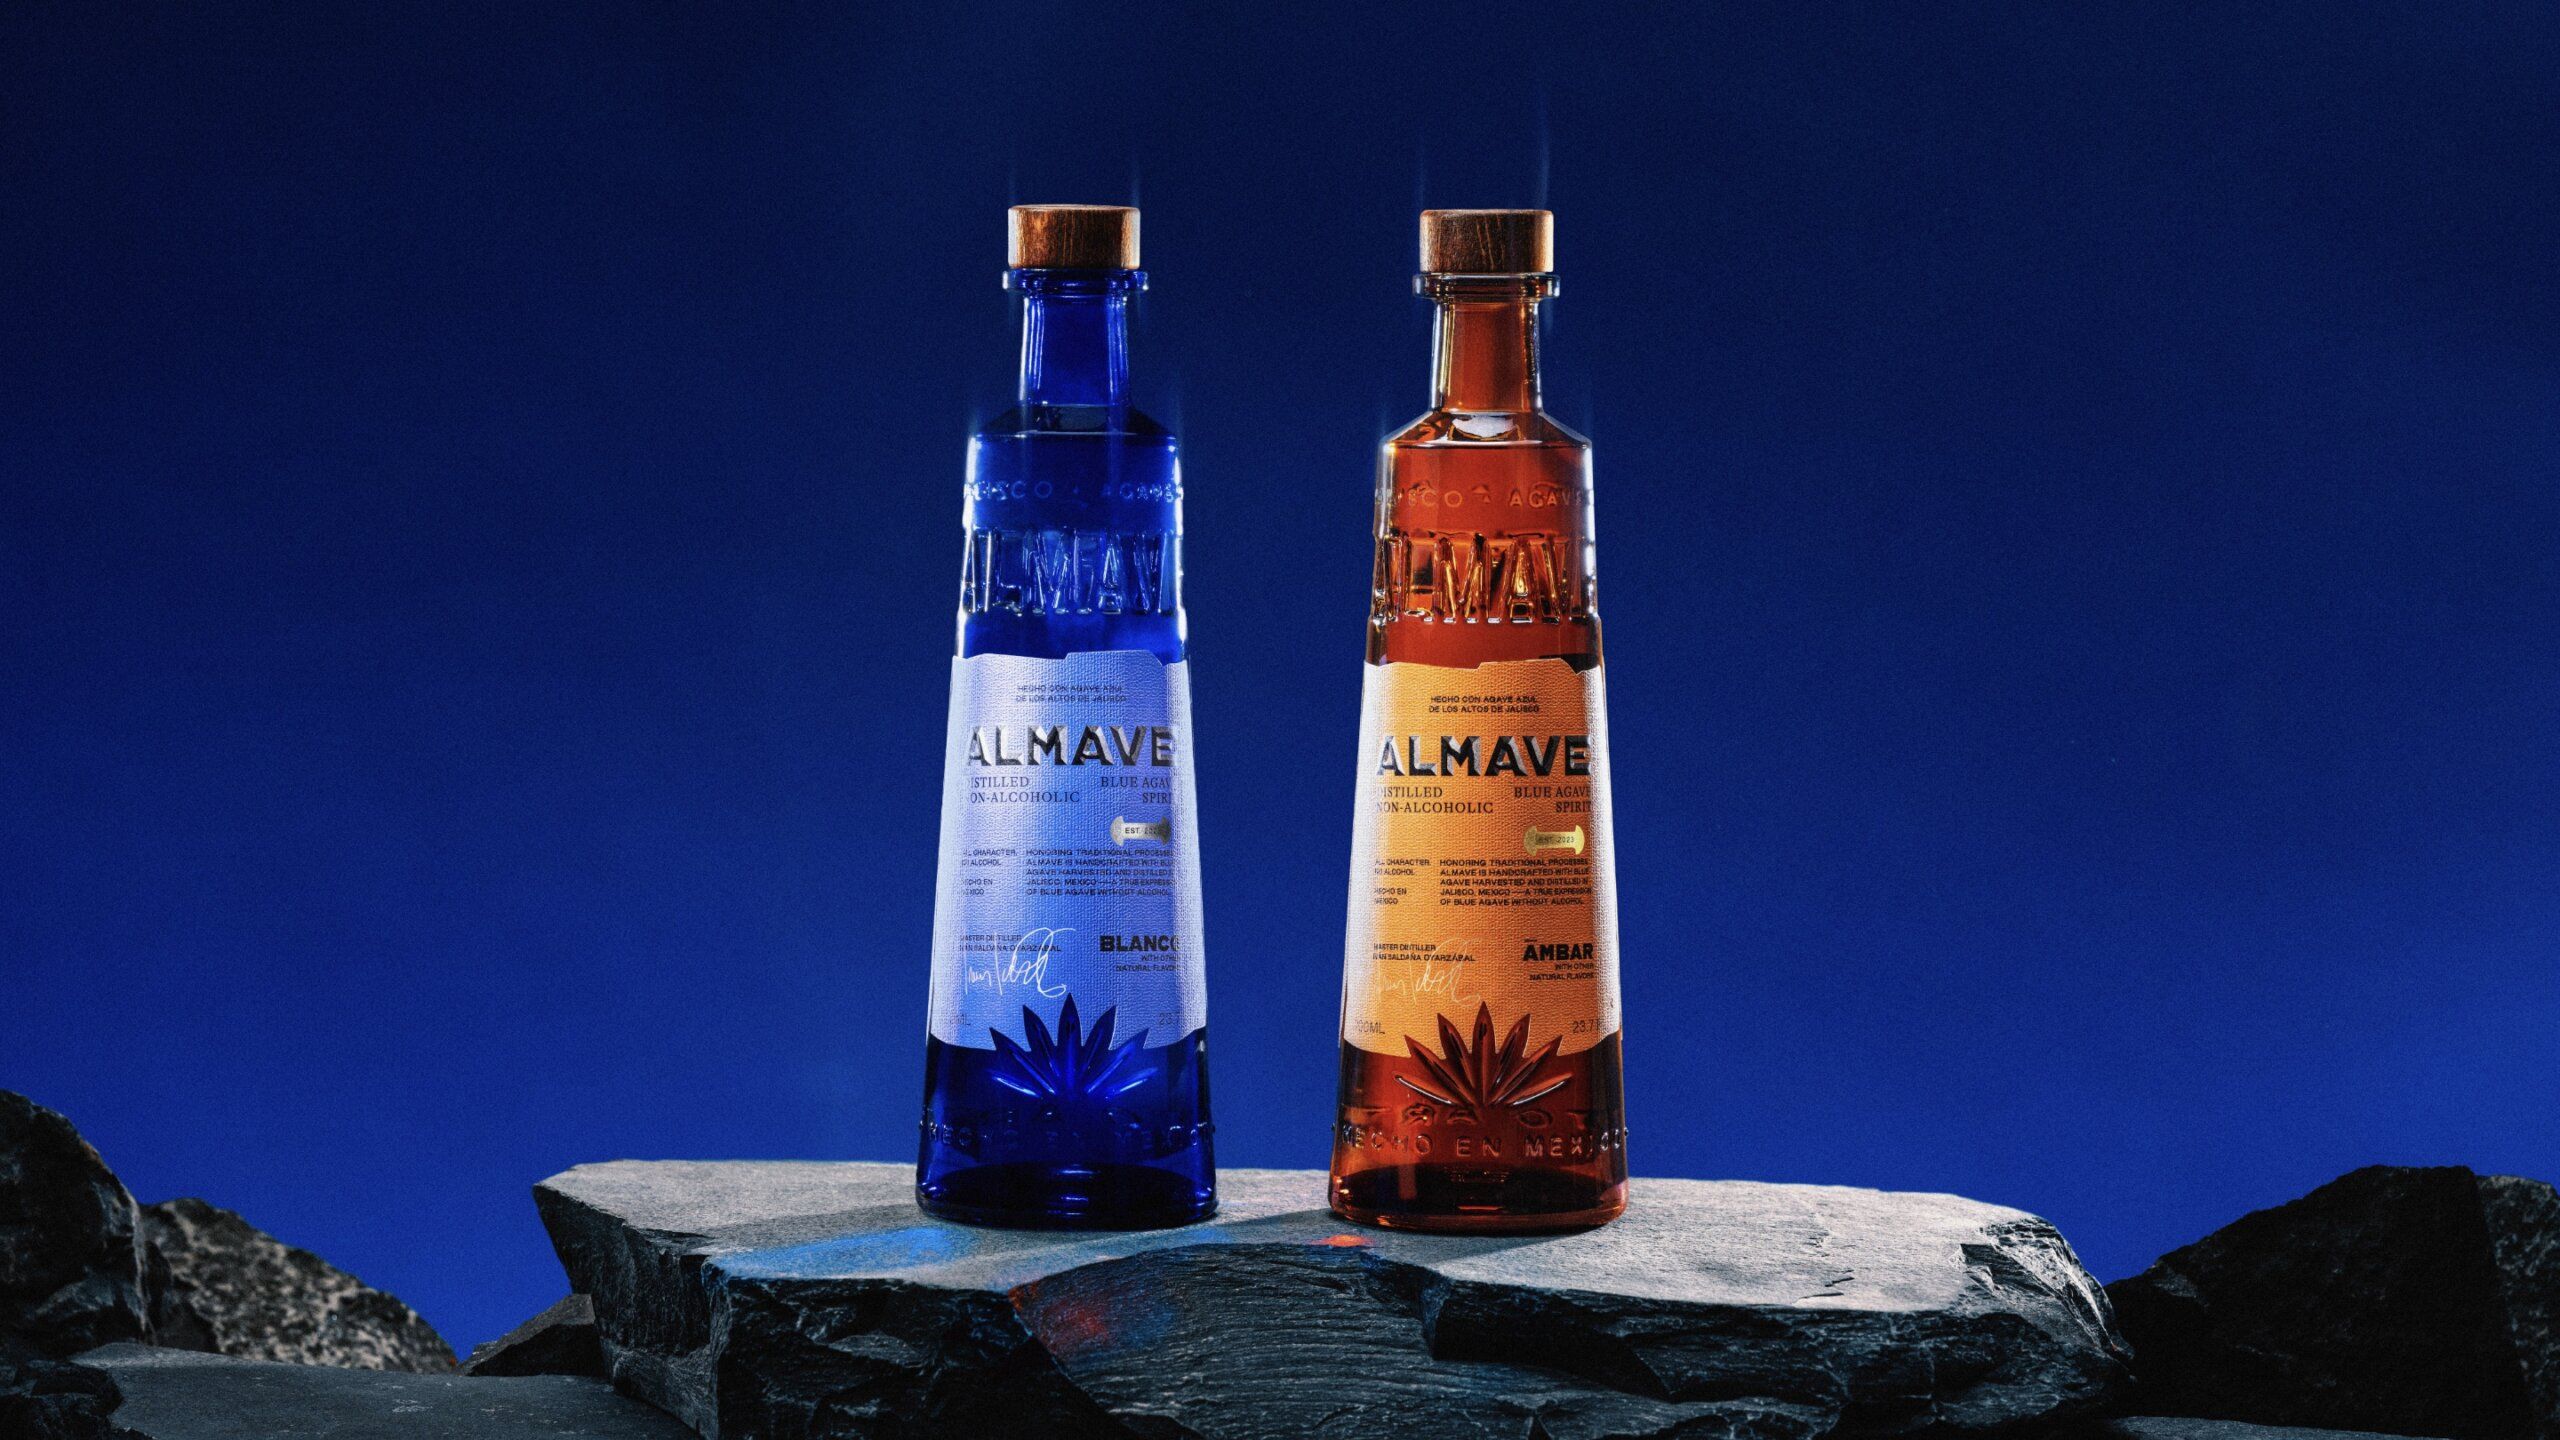 Two bottles of Almave